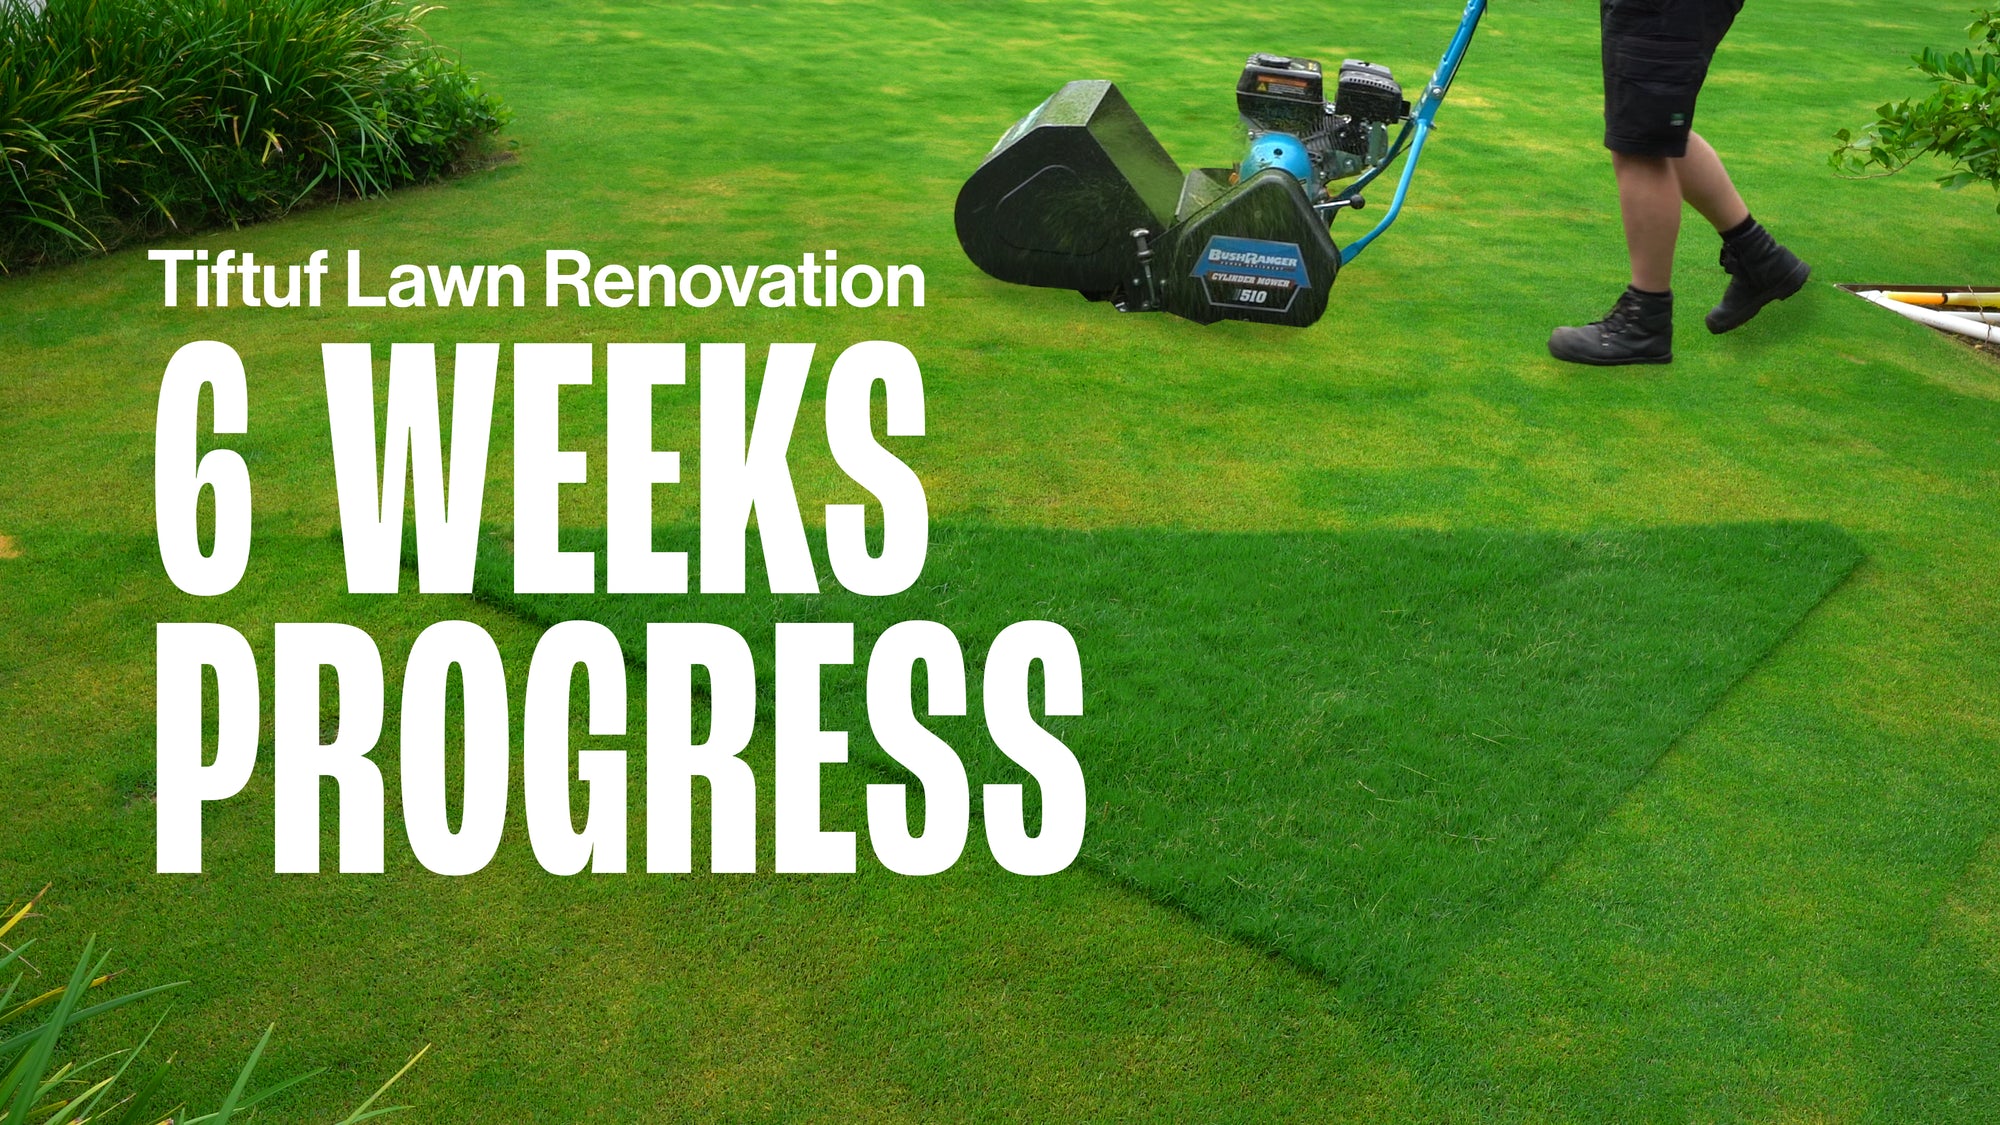 Tiftuf Lawn Renovation - 6 Week Progress